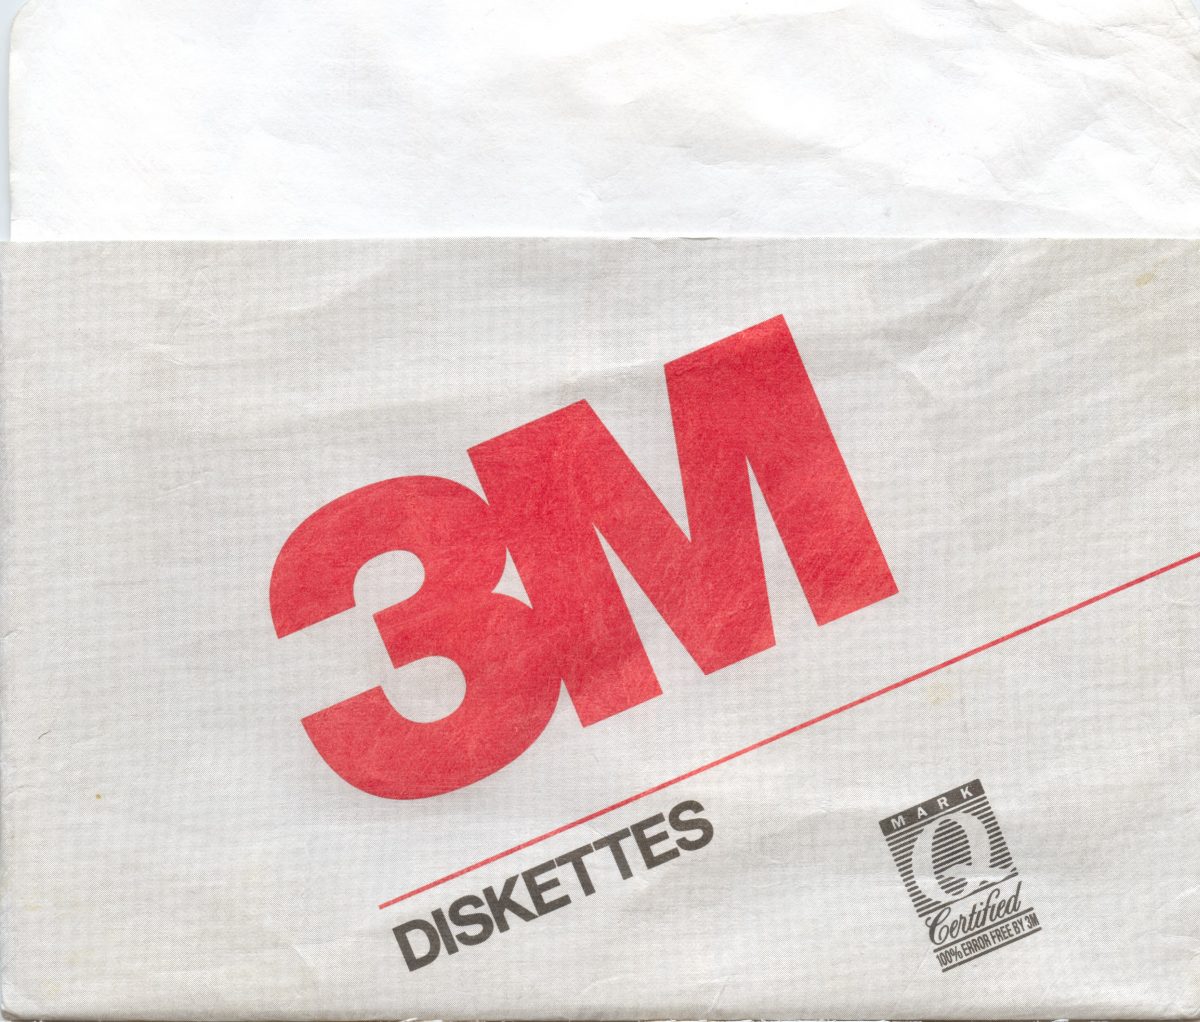 3m Diskette Disk Floppy DIsk Cover Sleeves